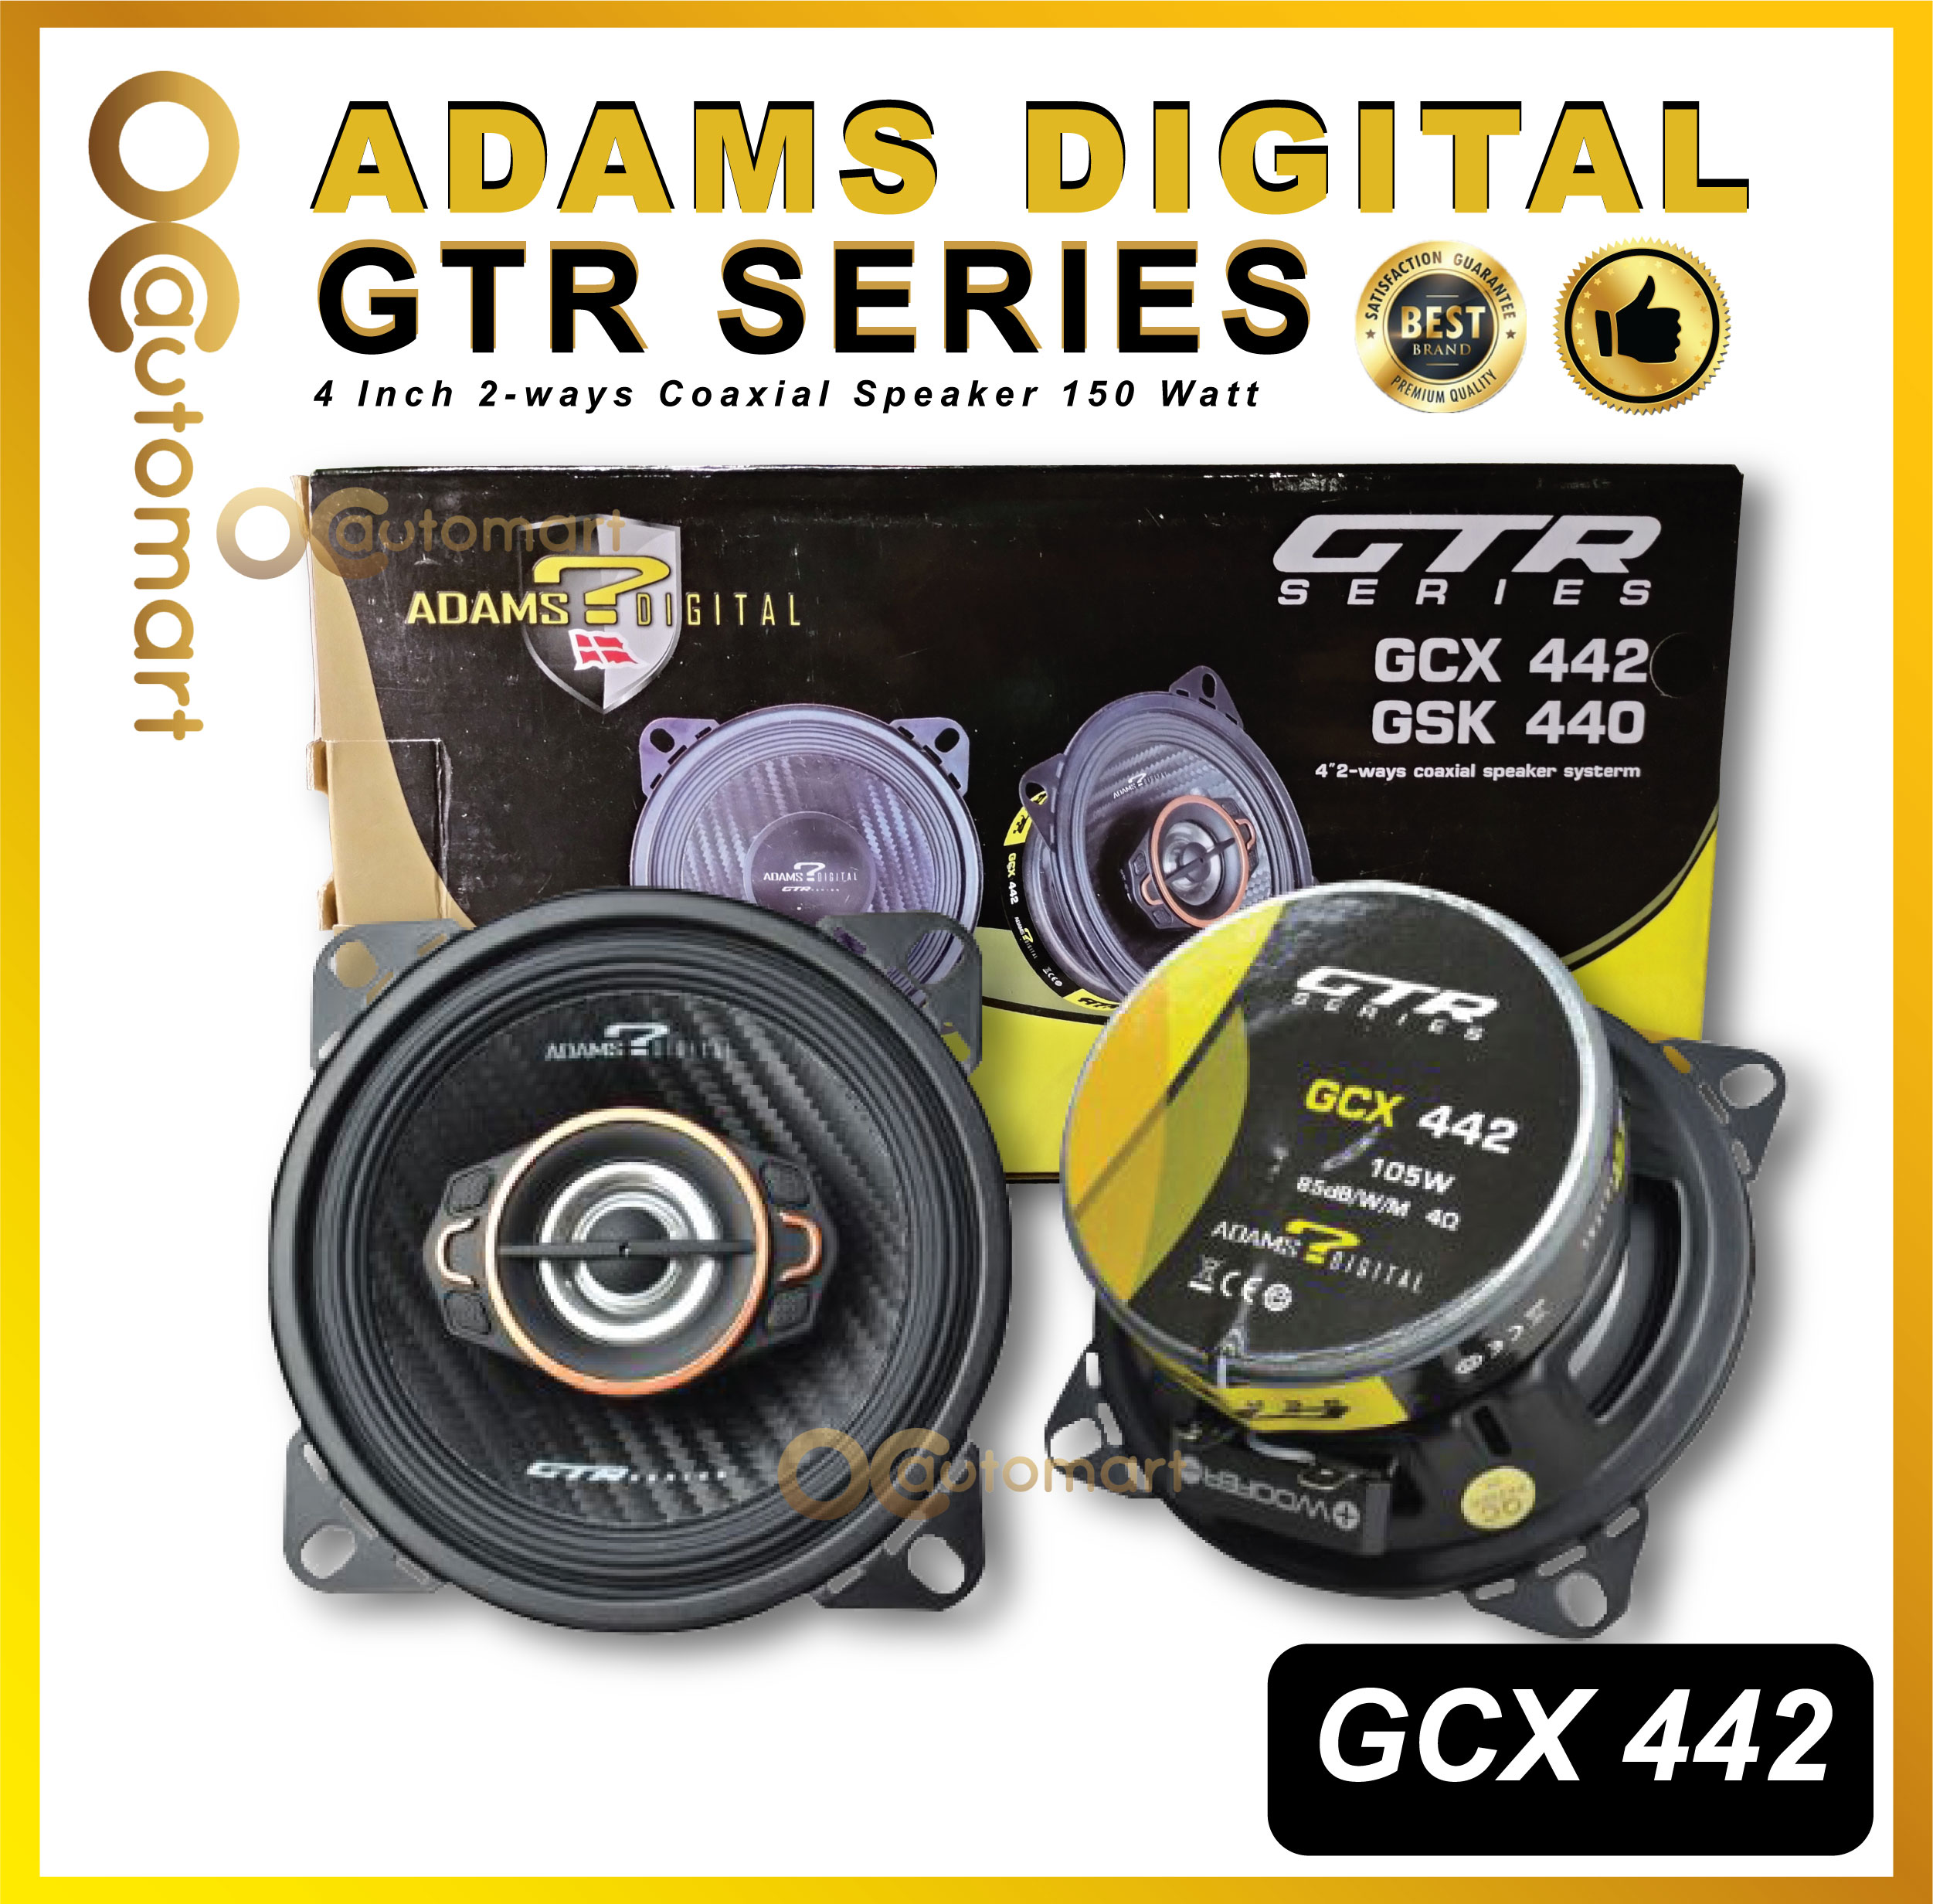 ADAMS DIGITAL GTR Series 4 Inch 2 ways Coaxial Speaker 150 Watt - GCX 442